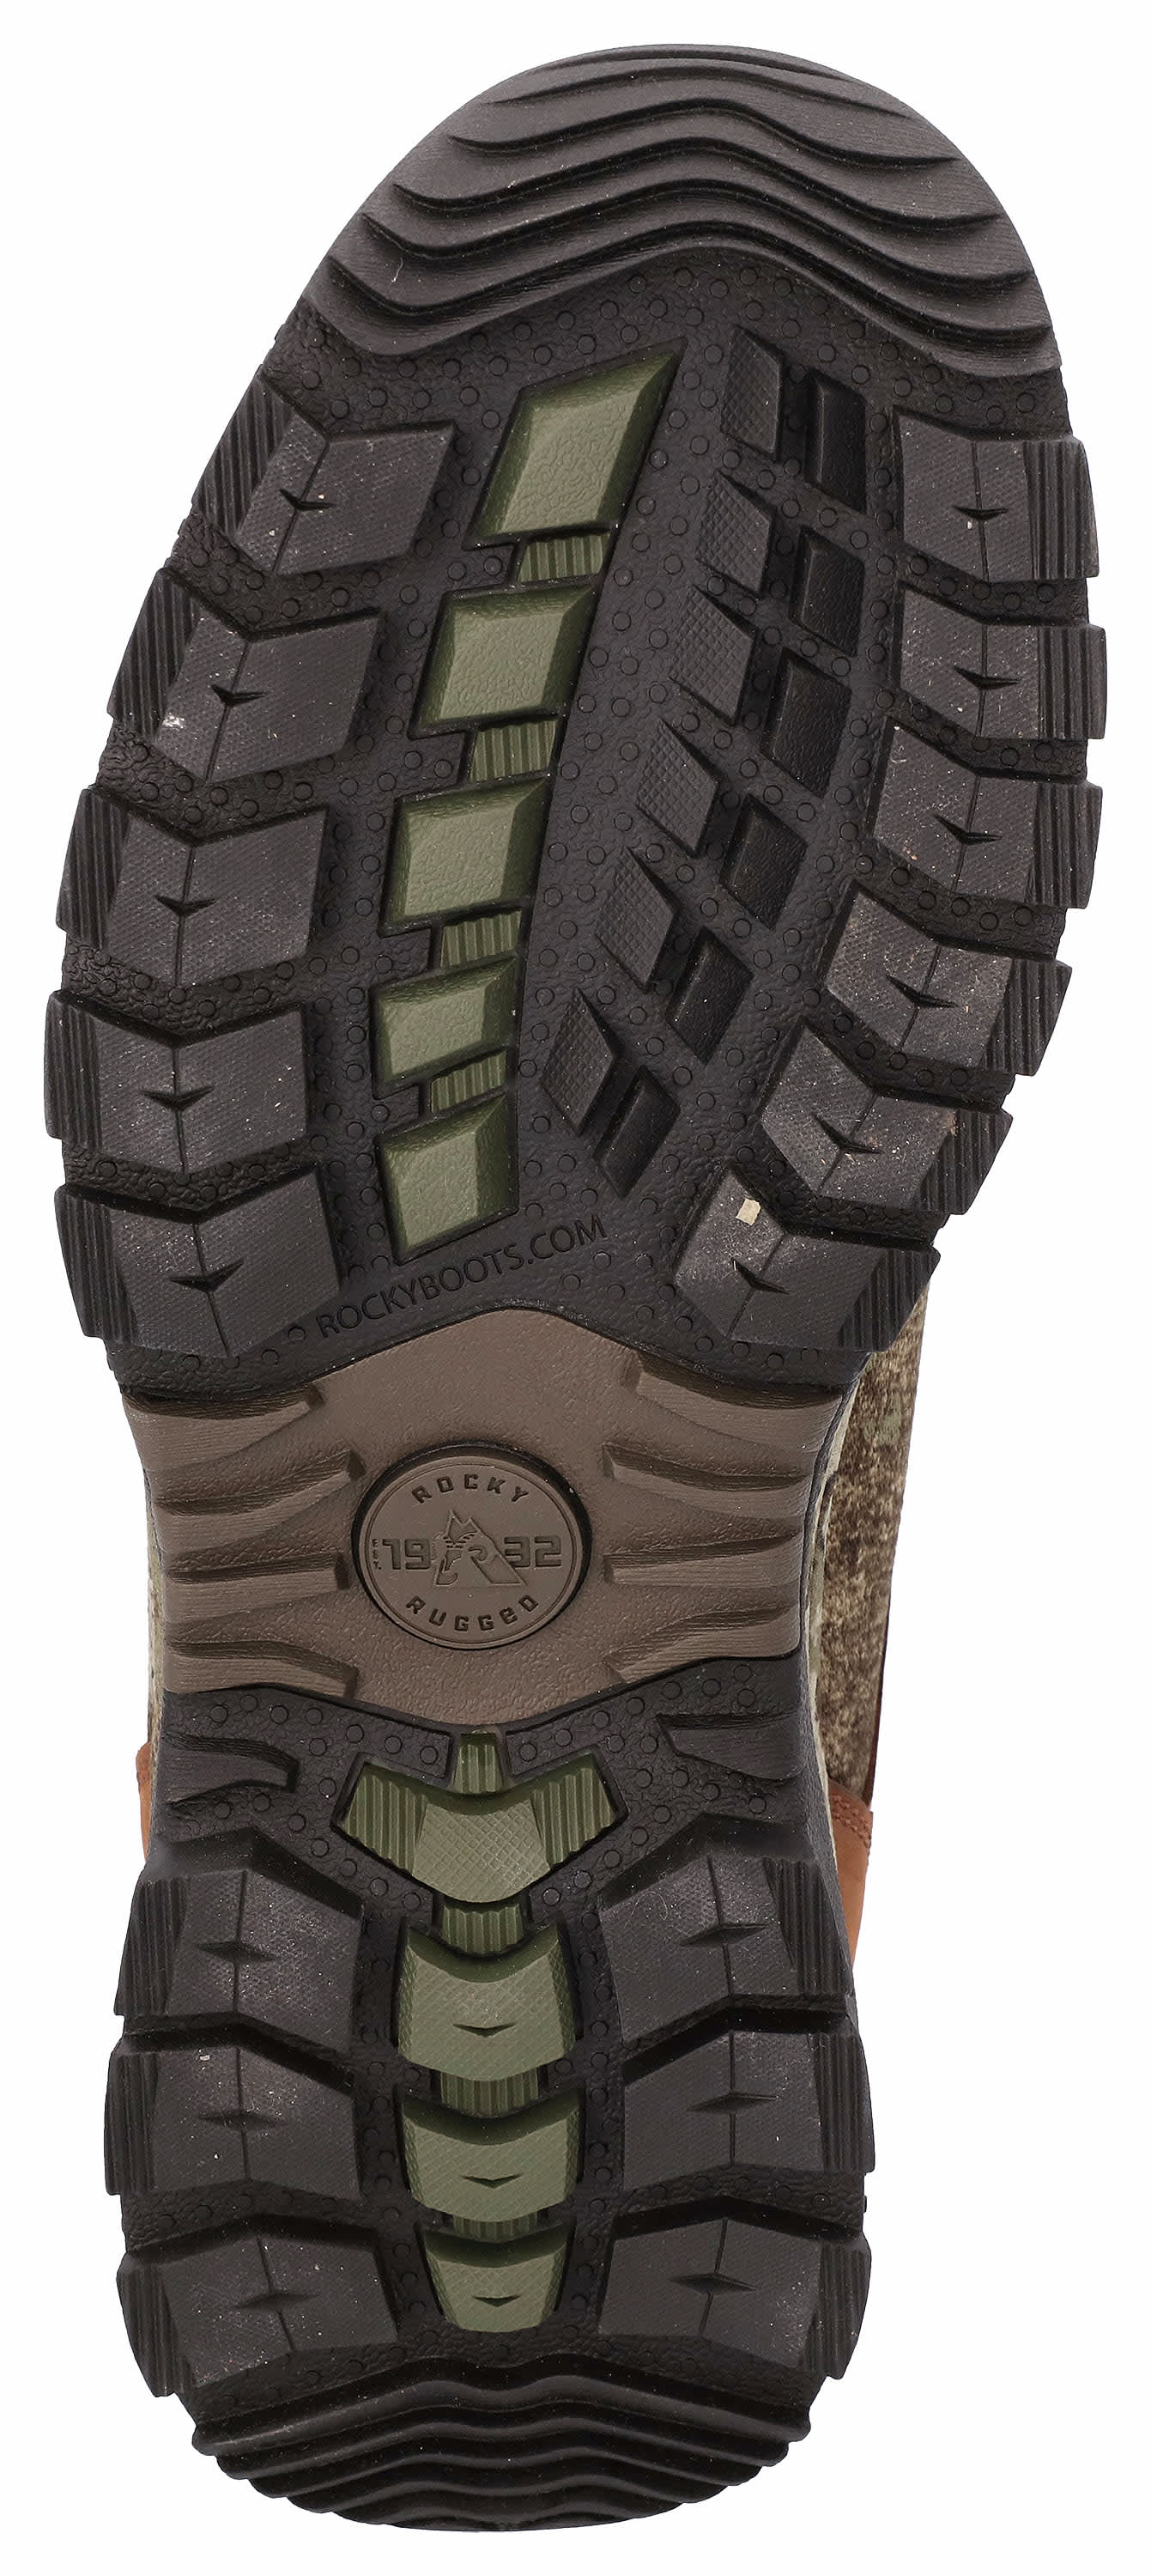 ROCKY® Lynx TrueTimber Insulated Waterproof Hunting Boots for Men ...